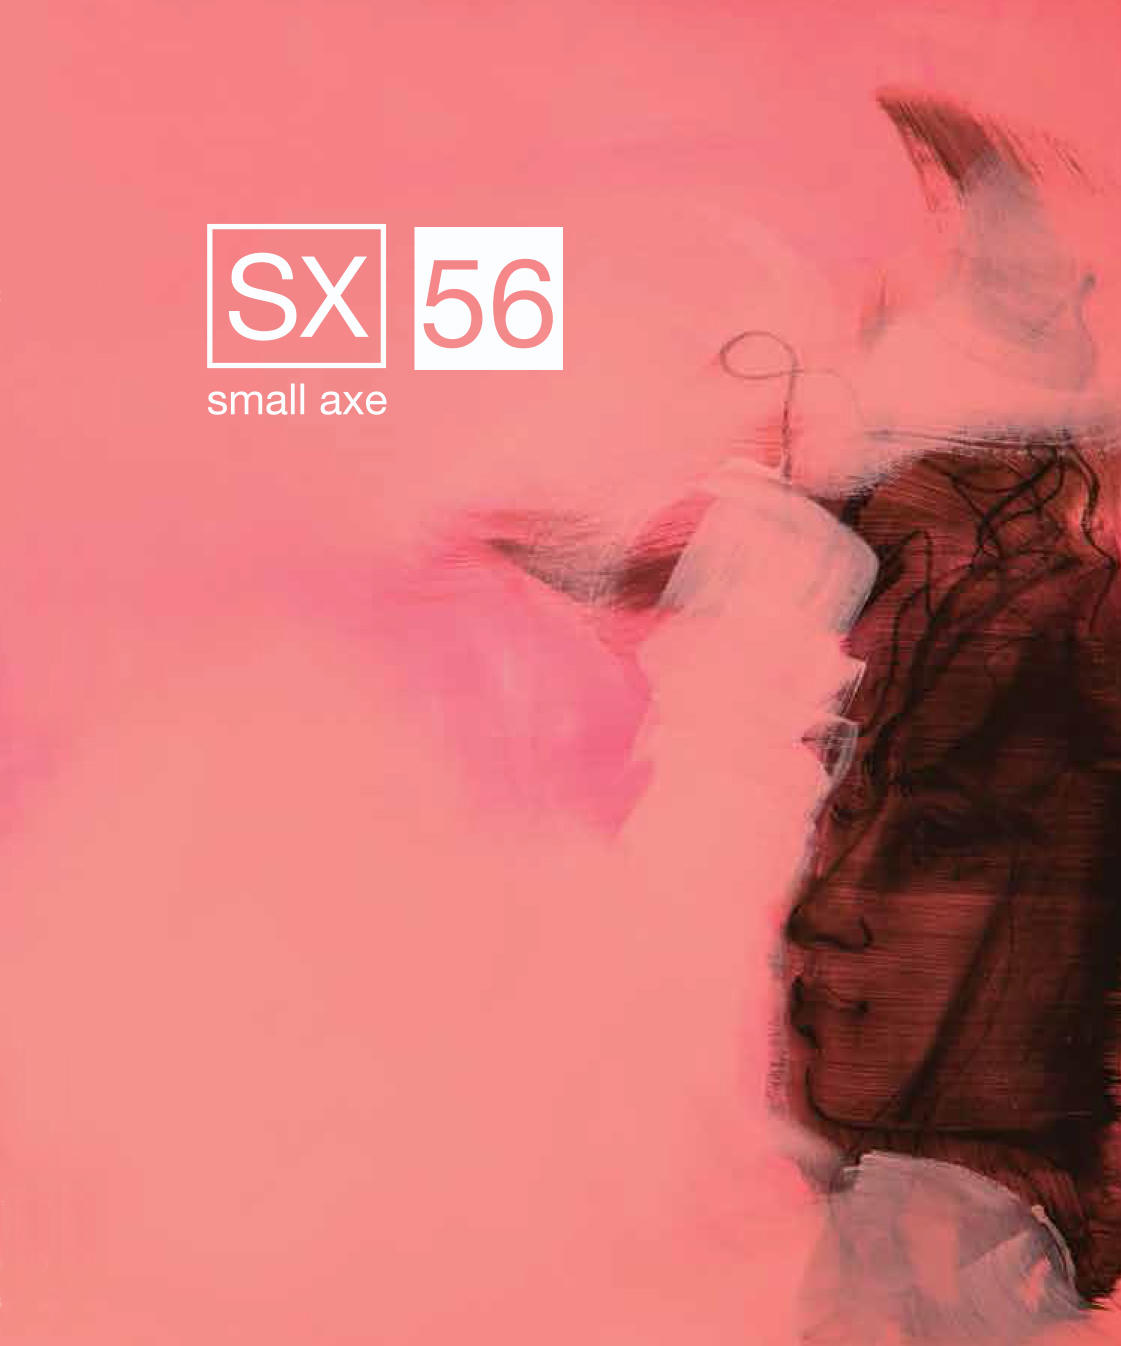 sx 56